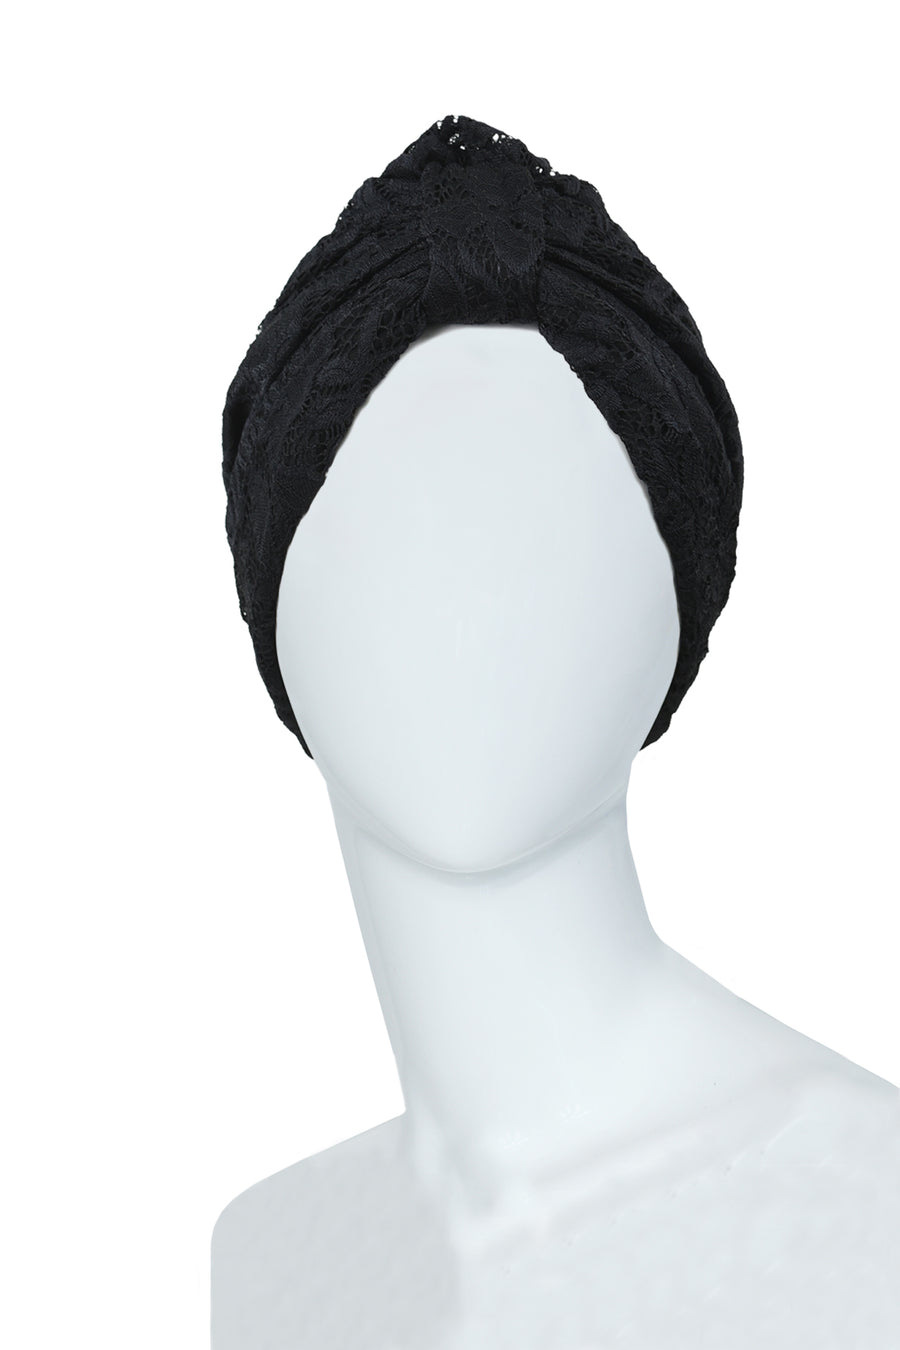 Dentelle black turban